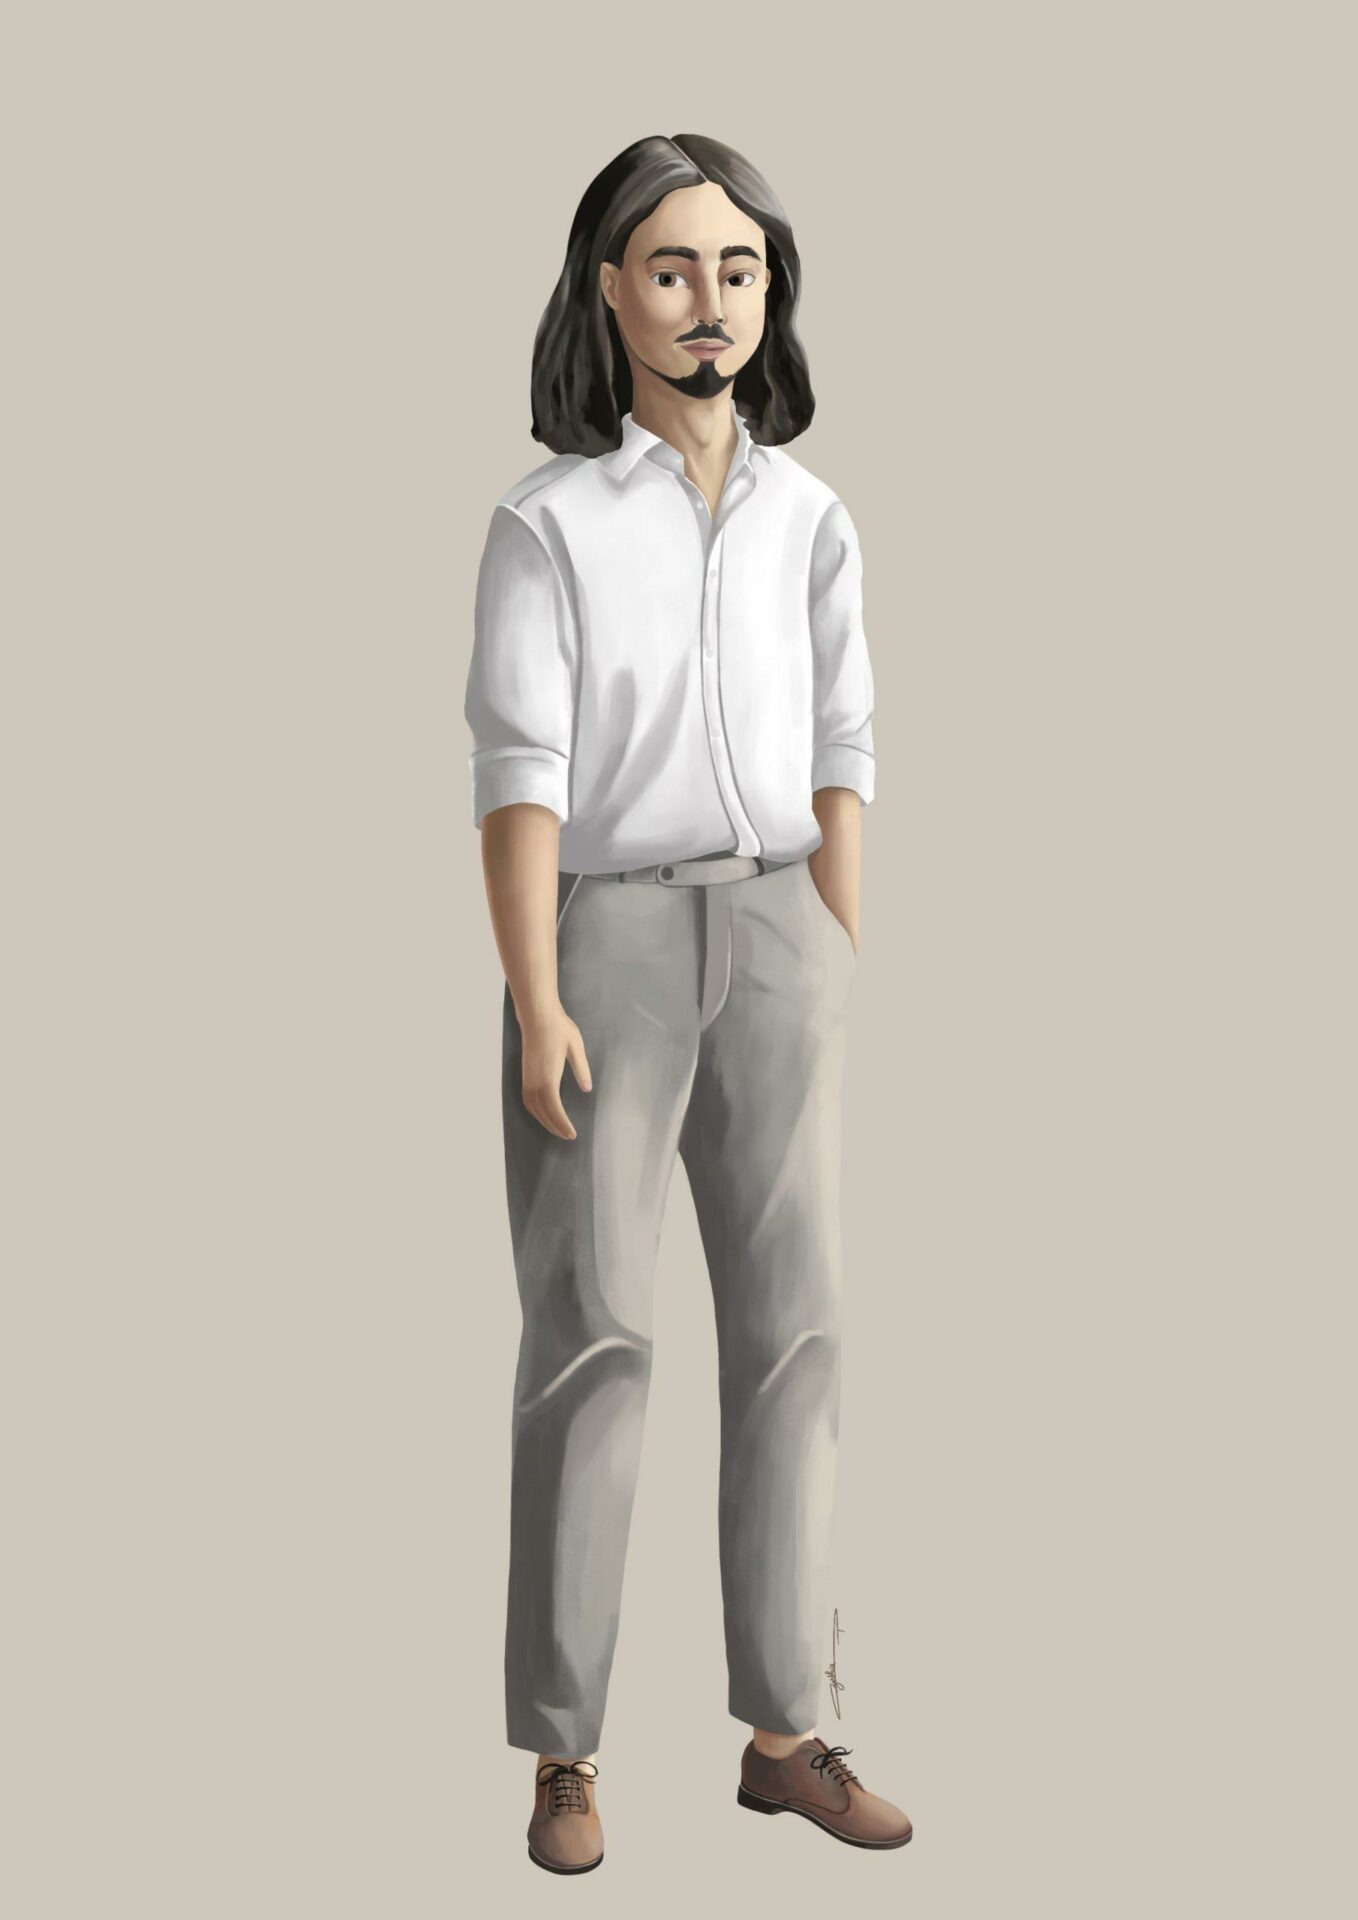 Dessin homme, illustration fait par Cynthia Artstudio. Man character